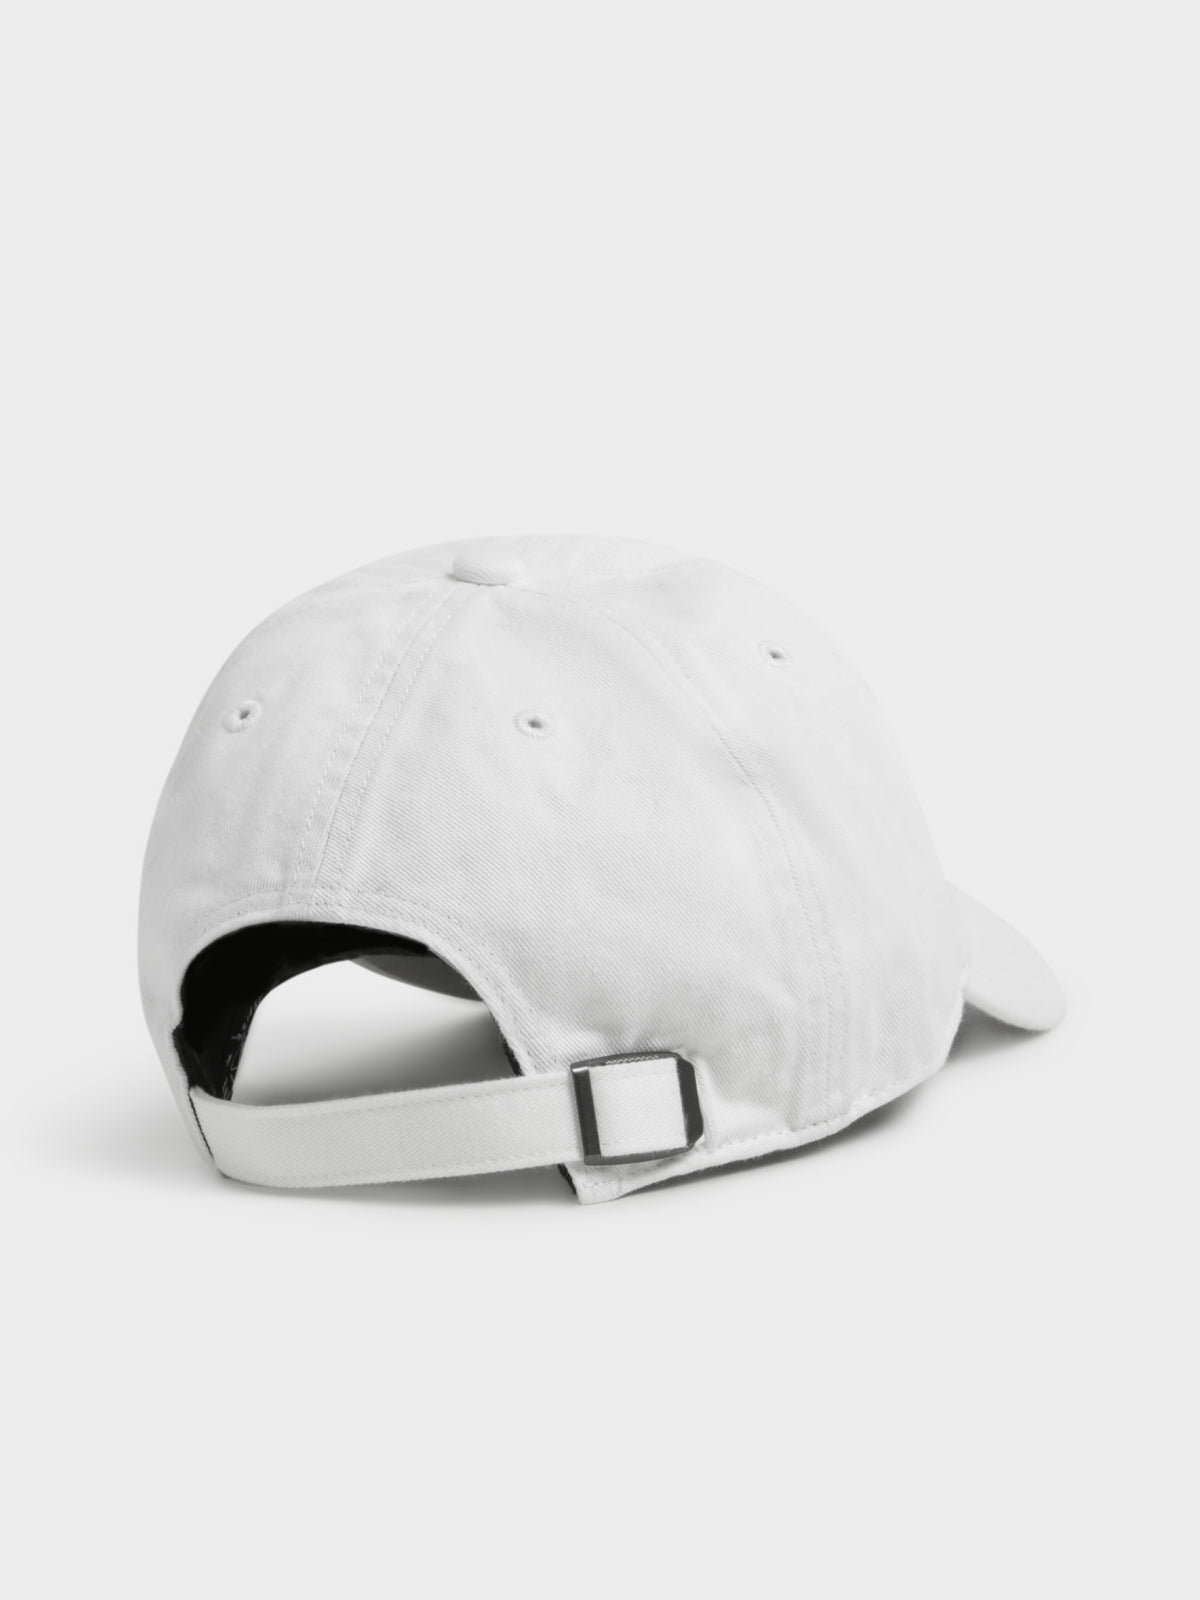 New York Yankees Adjustable Strapback Cap in White